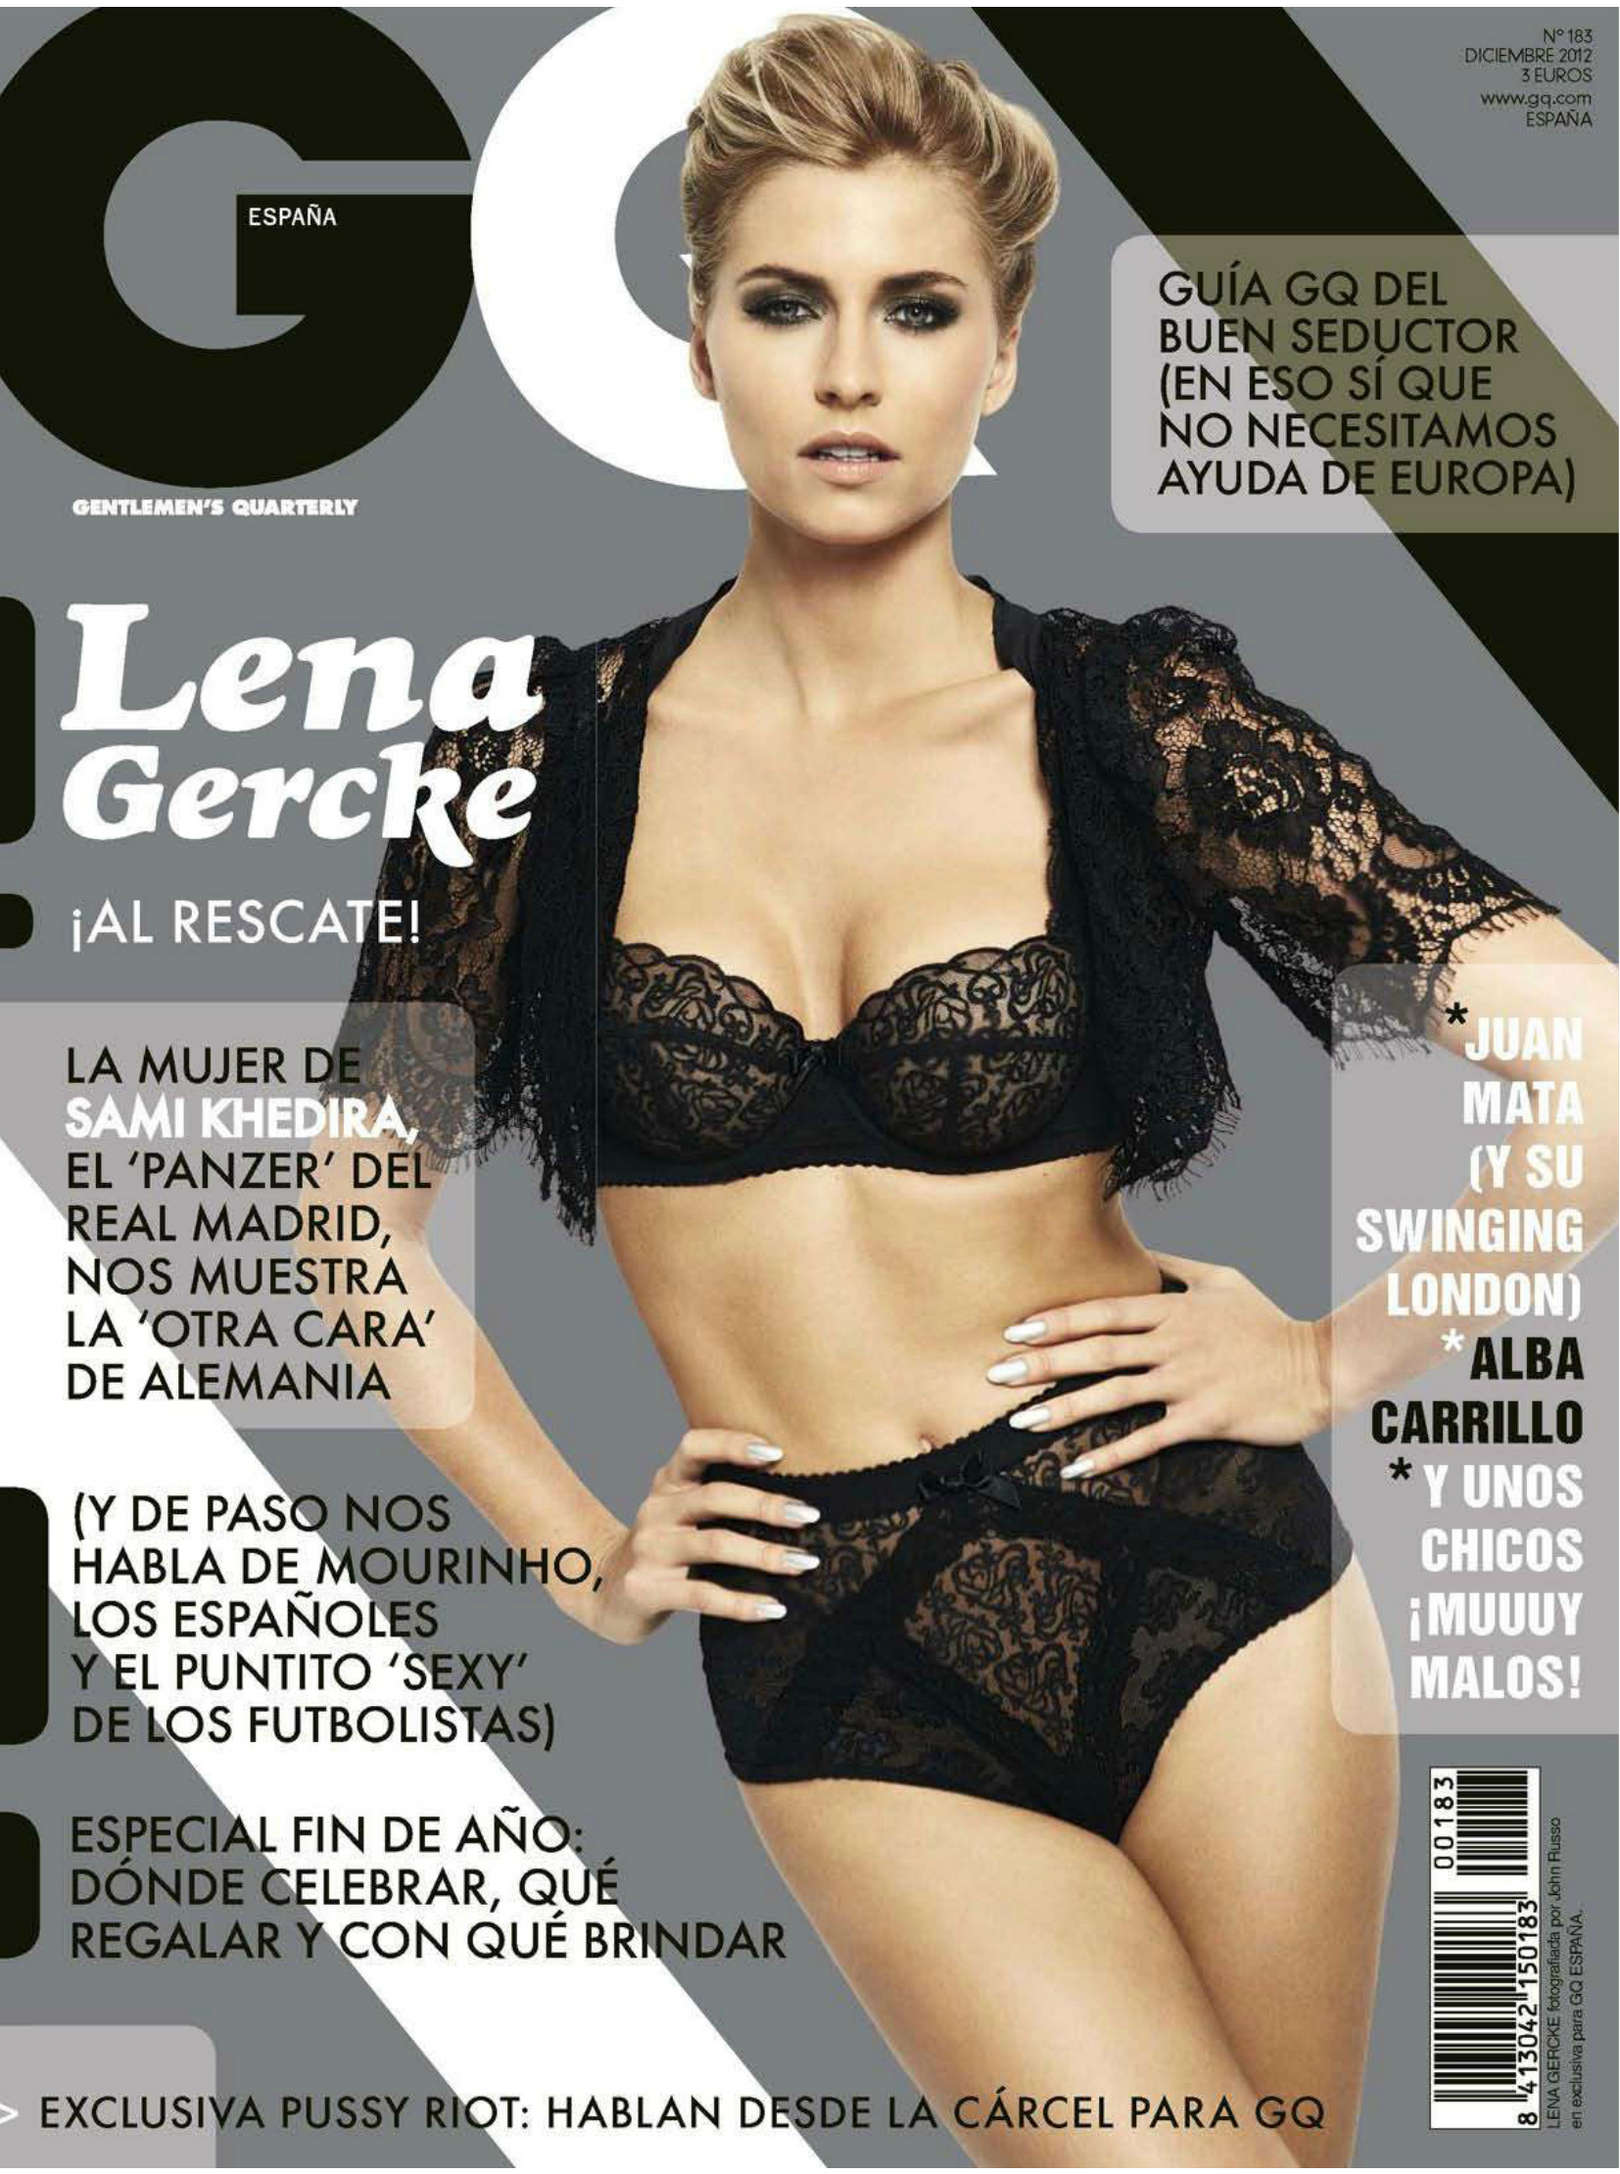 Lena Gercke - GQ Spain Magazine (December 2012)